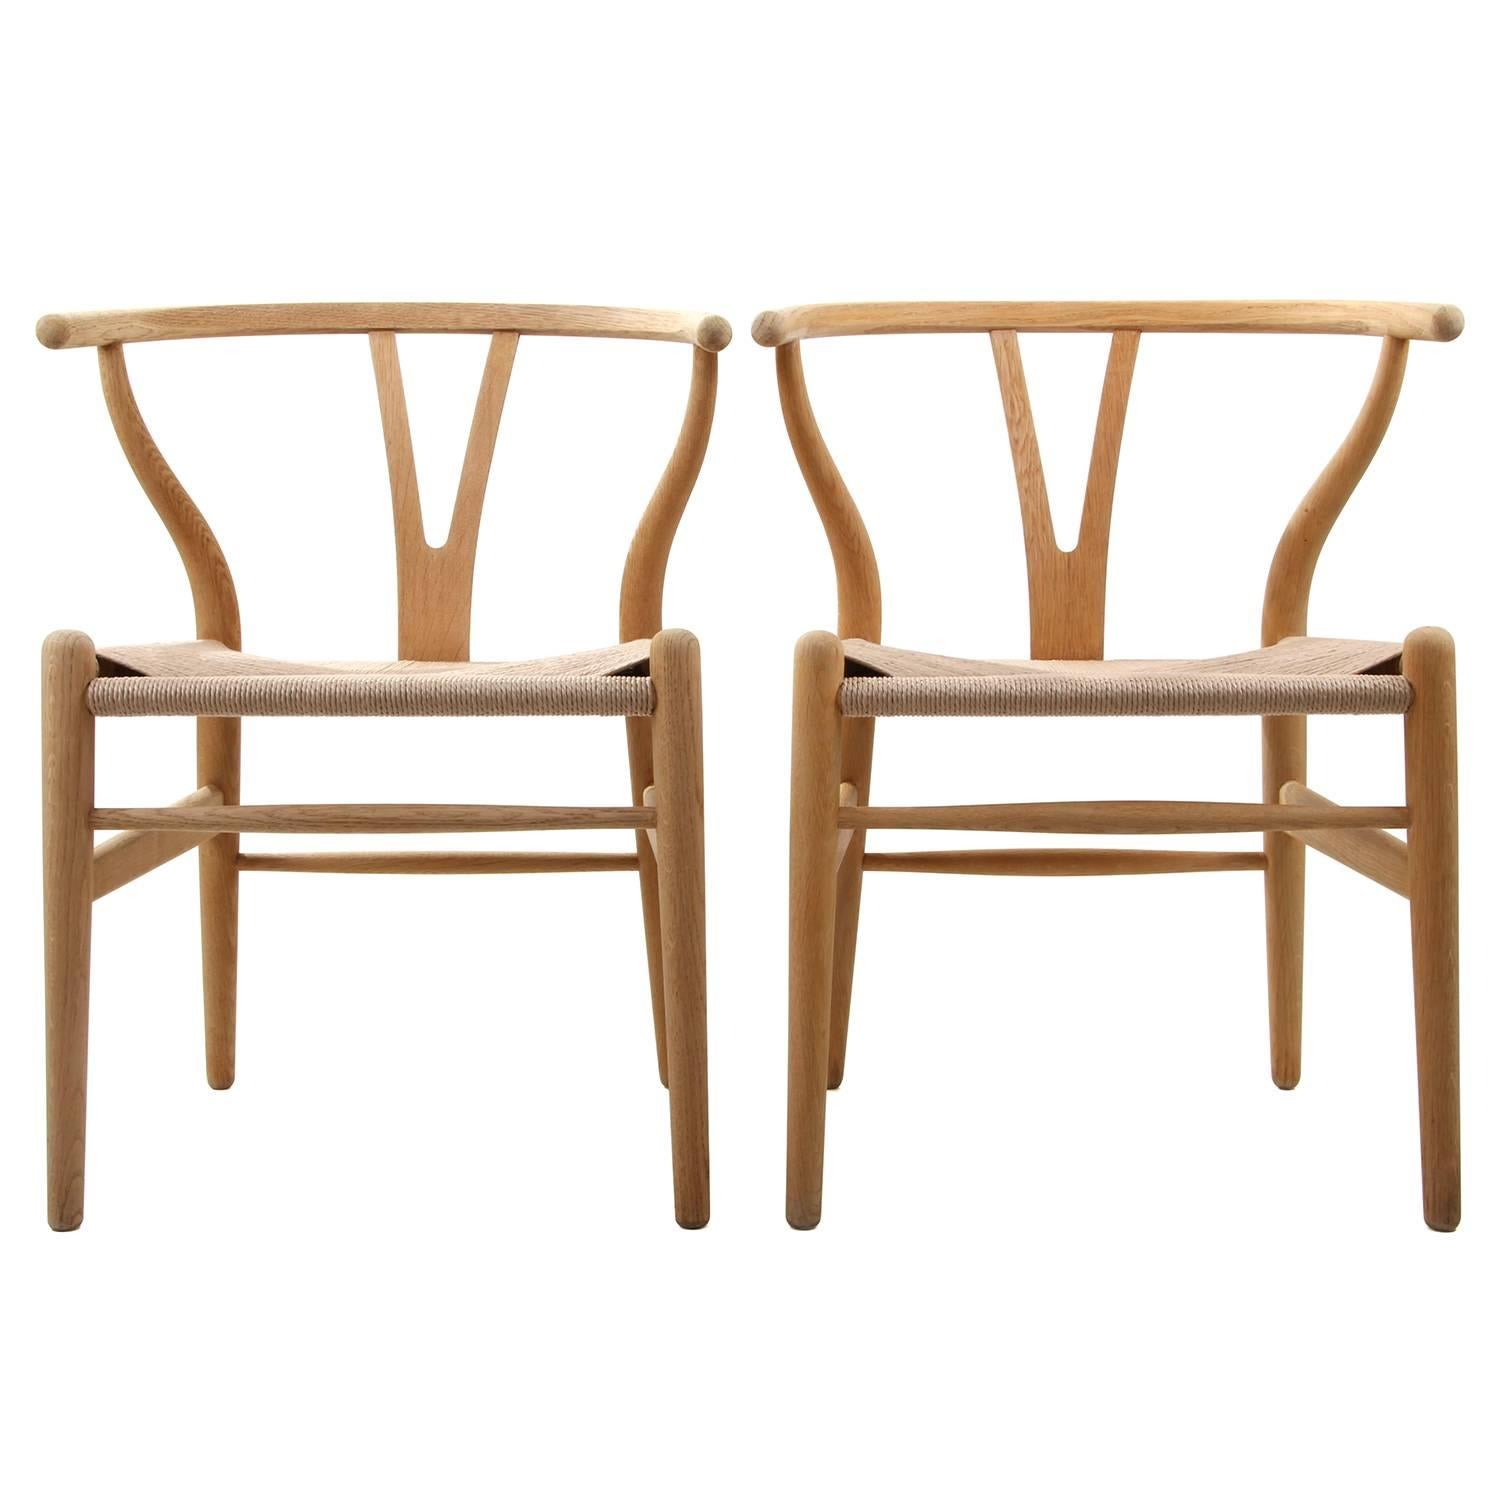 CH24, Wishbone Chairs 'Pair' by Hans J Wegner for Carl Hansen & Son in 1949